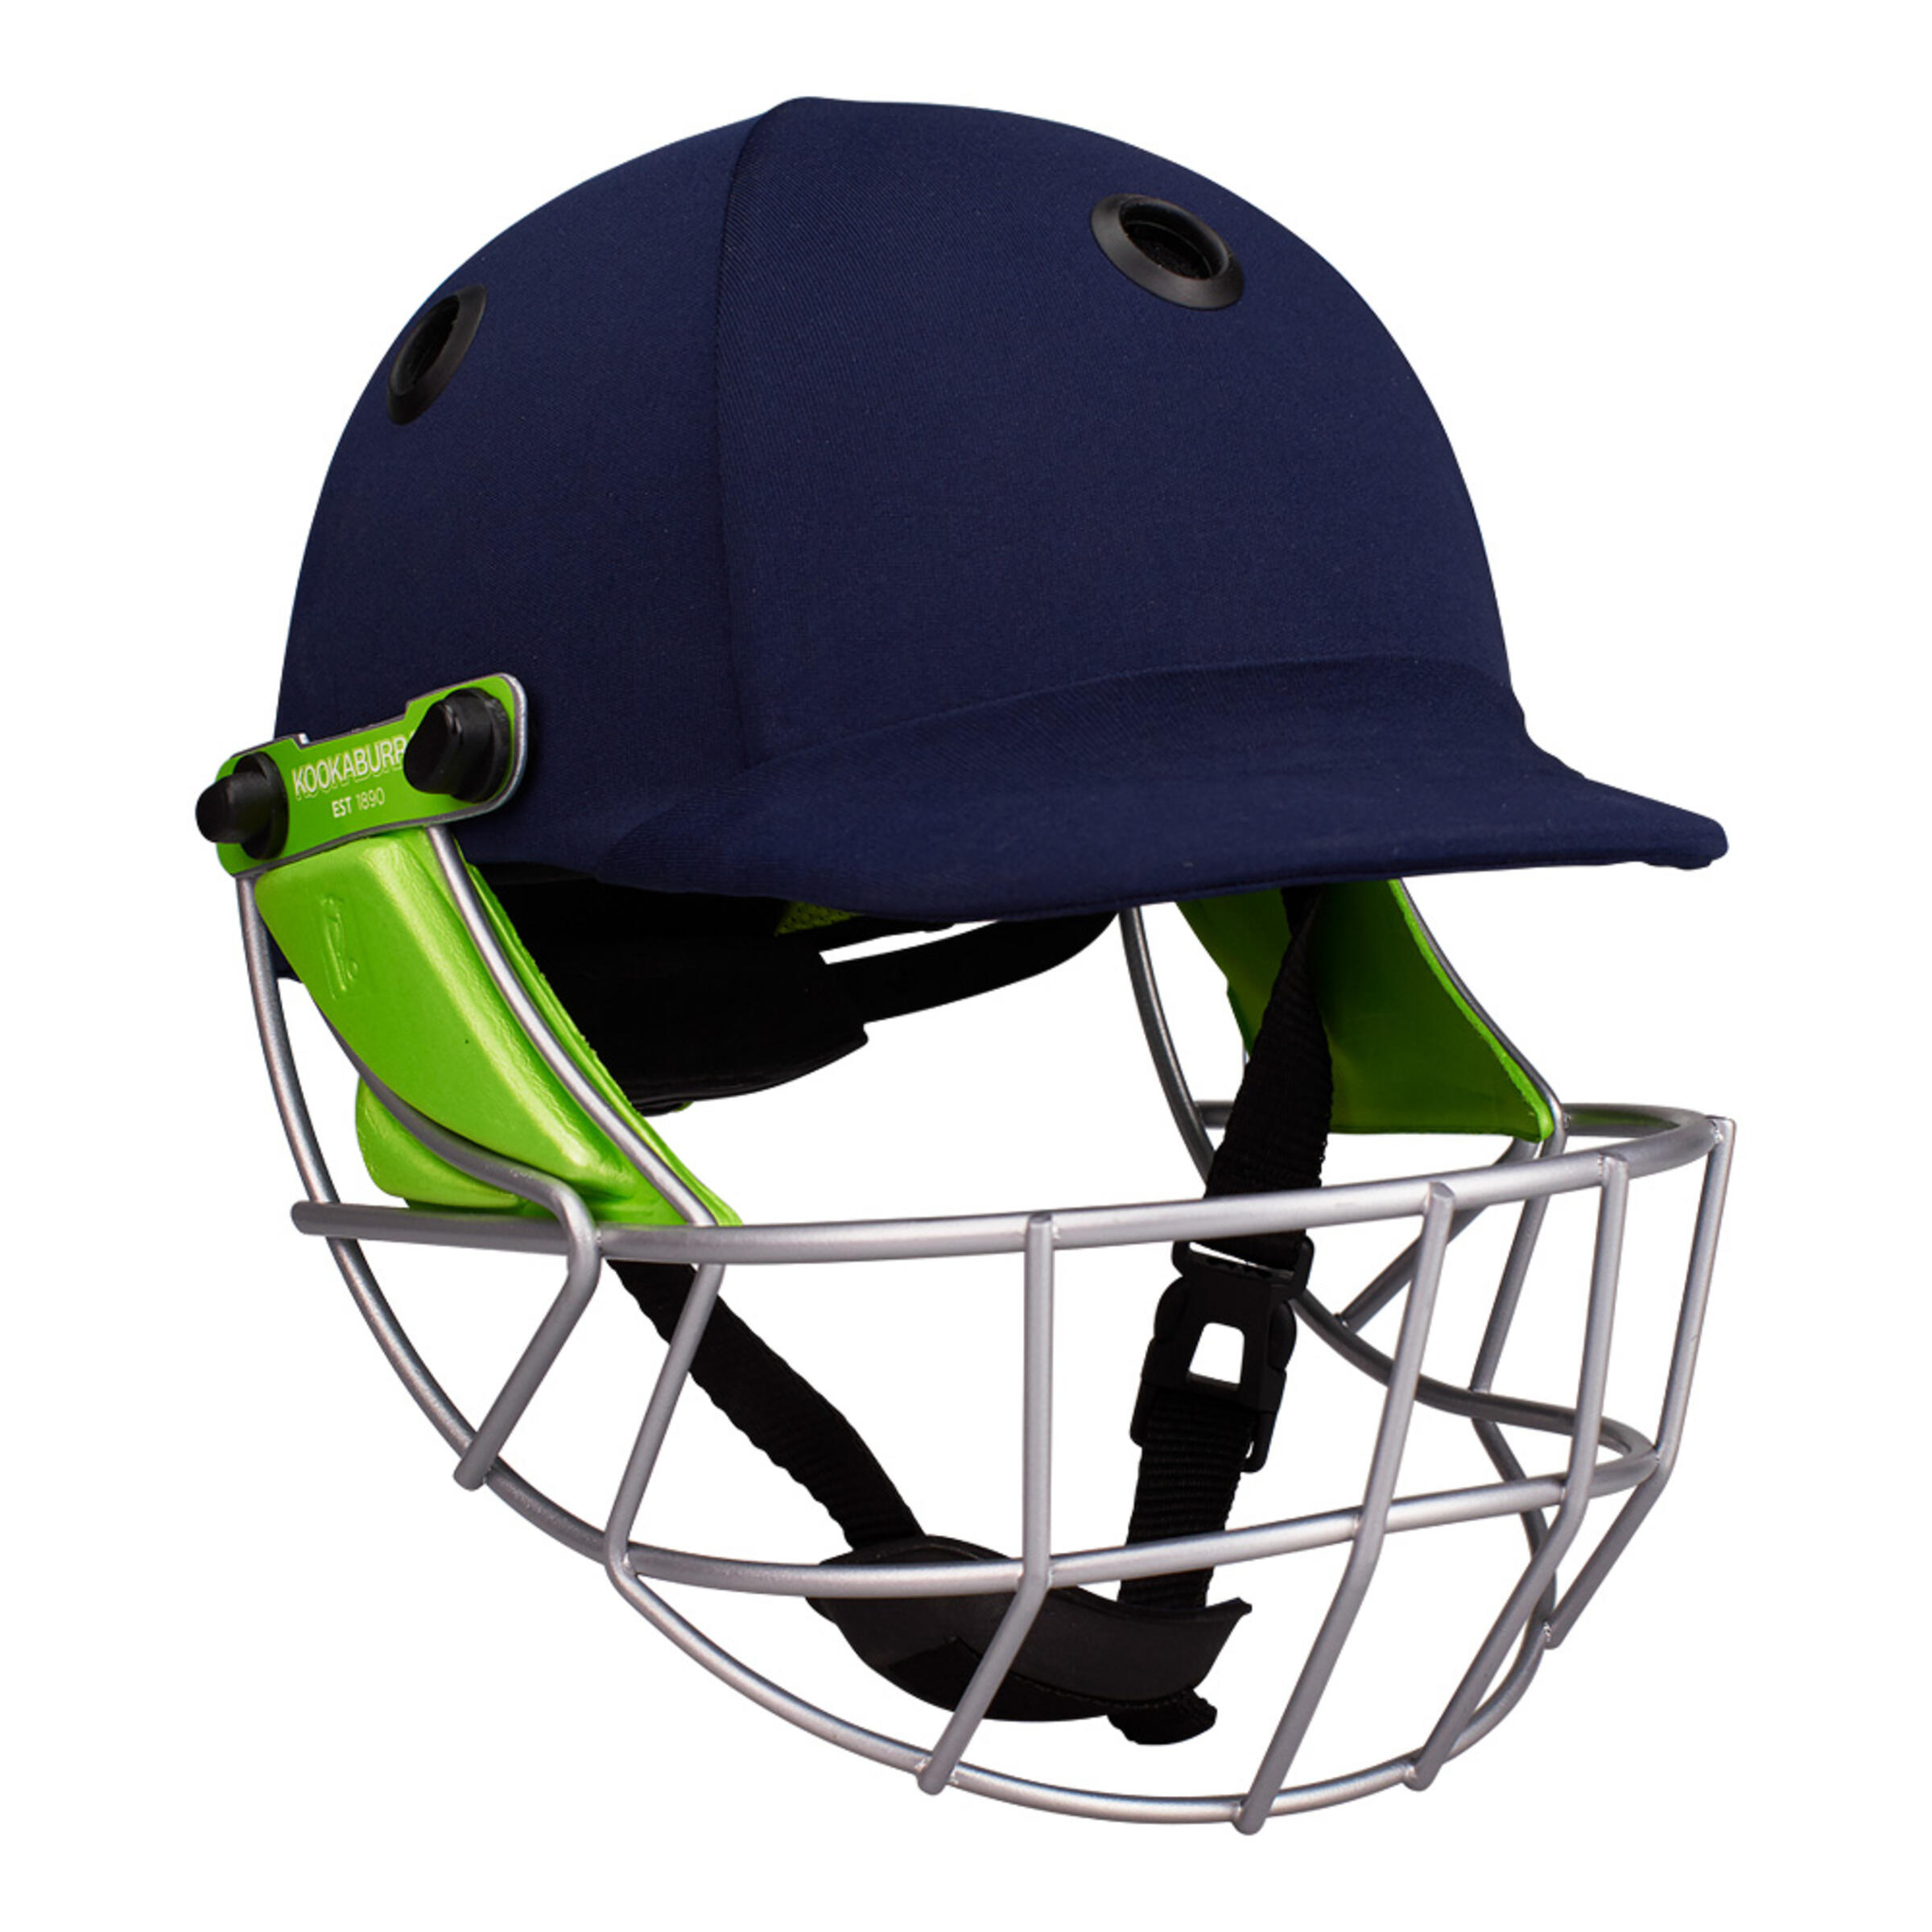 KOOKABURRA Pro 600 Cricket Batting Helmet Junior Small